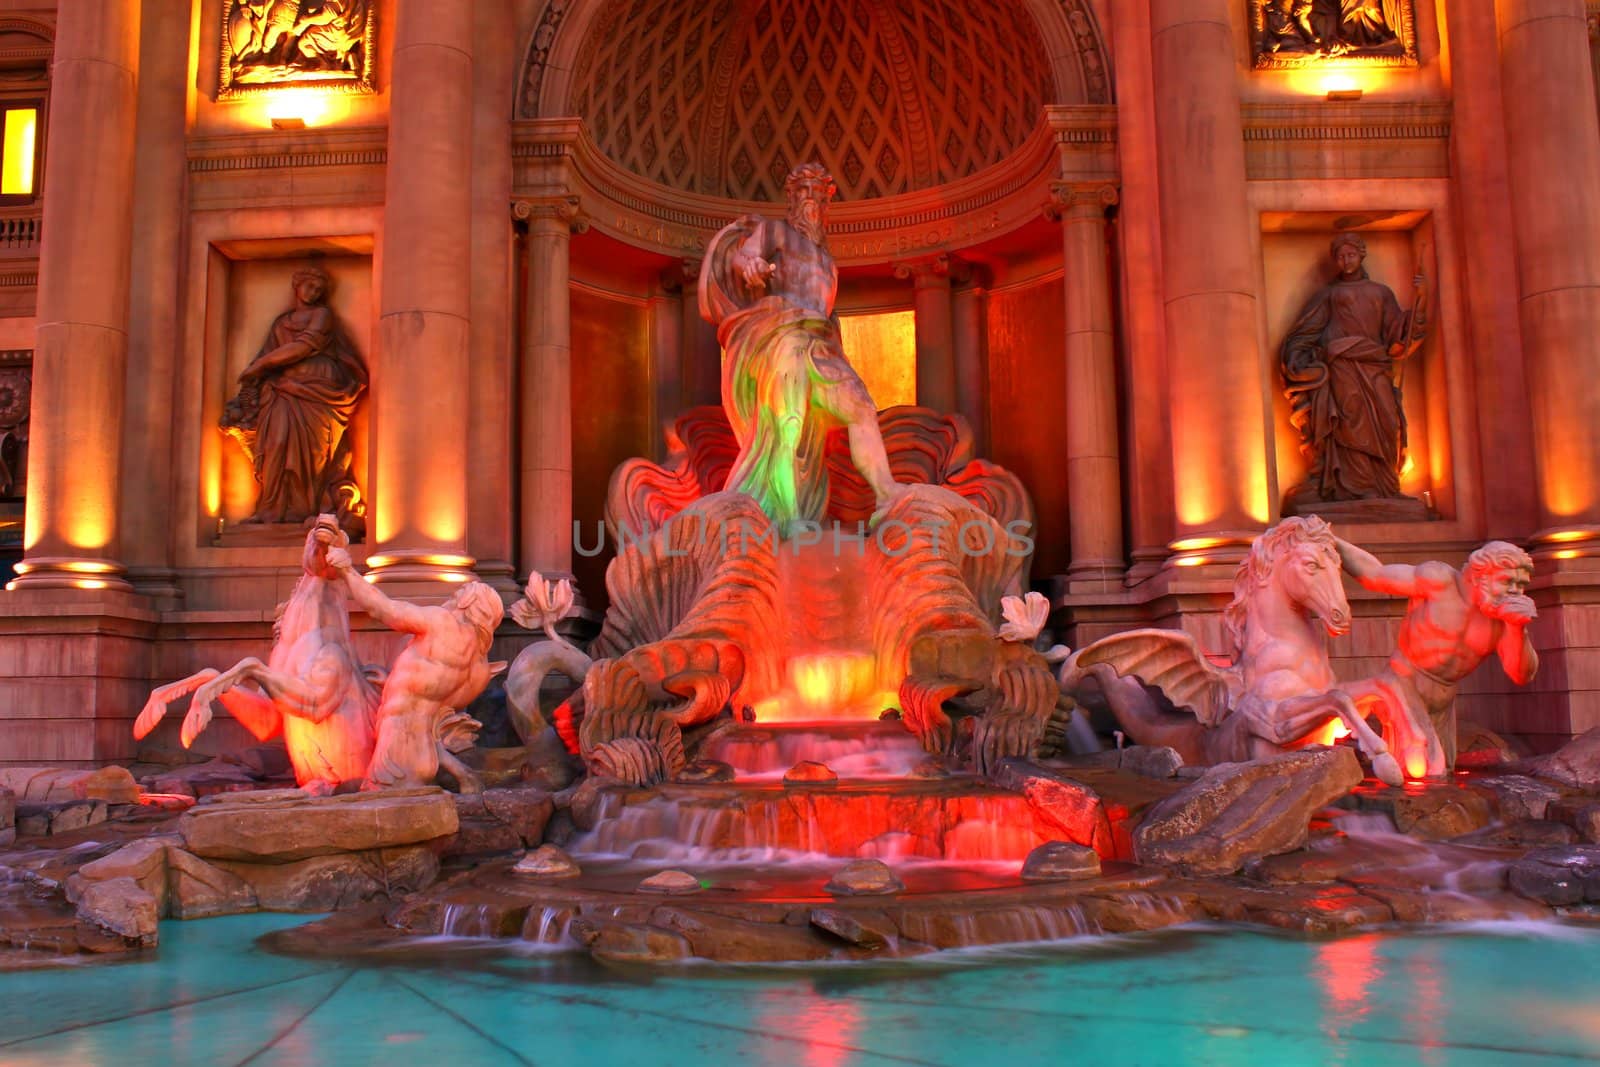 Las Vegas, USA - May 22, 2012: Sculptures outside Caesars Palace hotel and casino of Las Vegas showcase the establishment's Roman Empire theme.